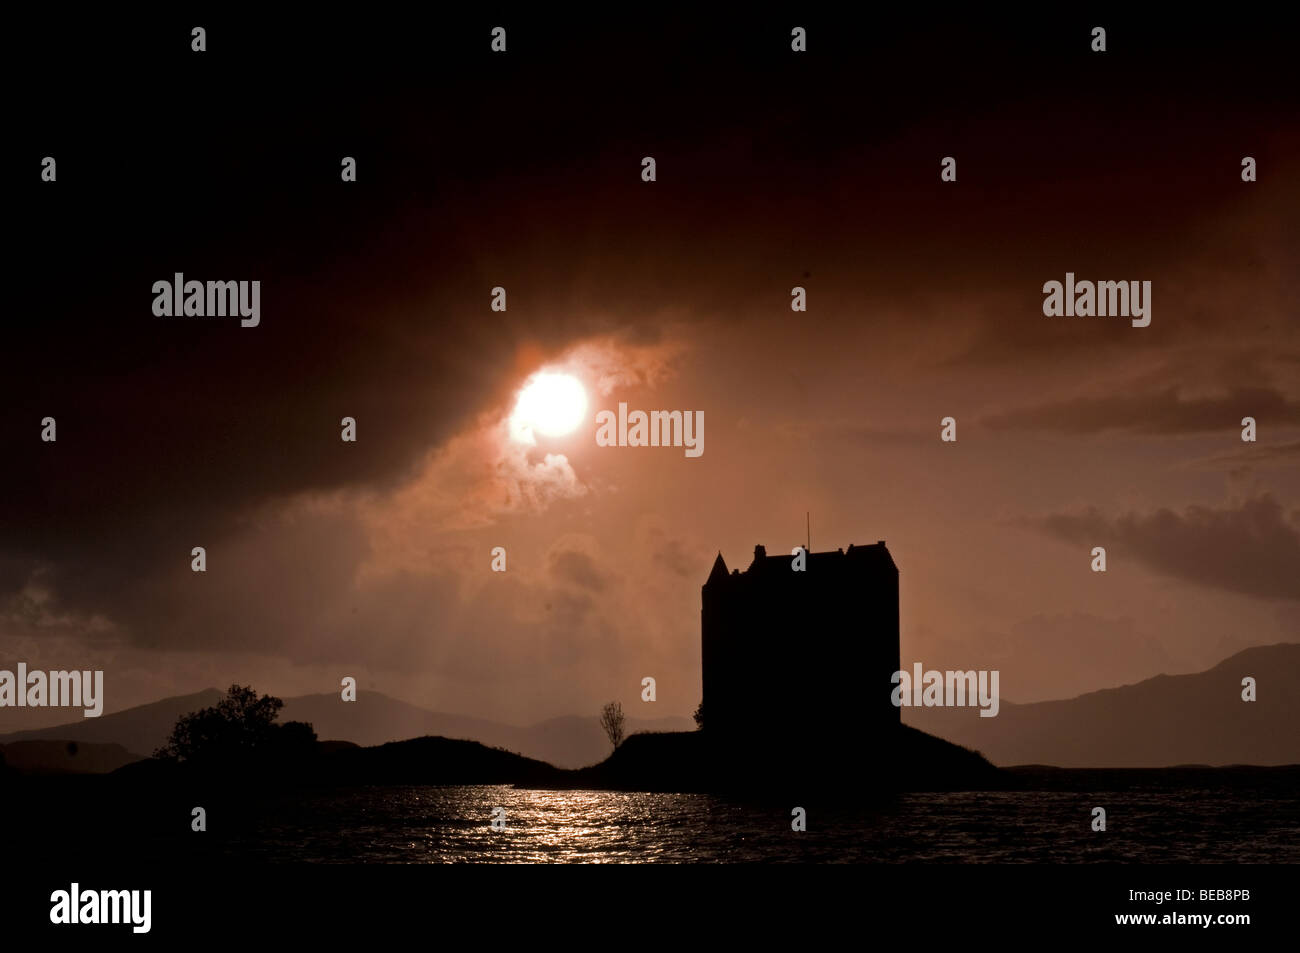 Castle Stalker in Appin Land sitzt auf der Felseninsel Plattform am Ende des Loch Linnhe, Highlands Schottlands. Stockfoto